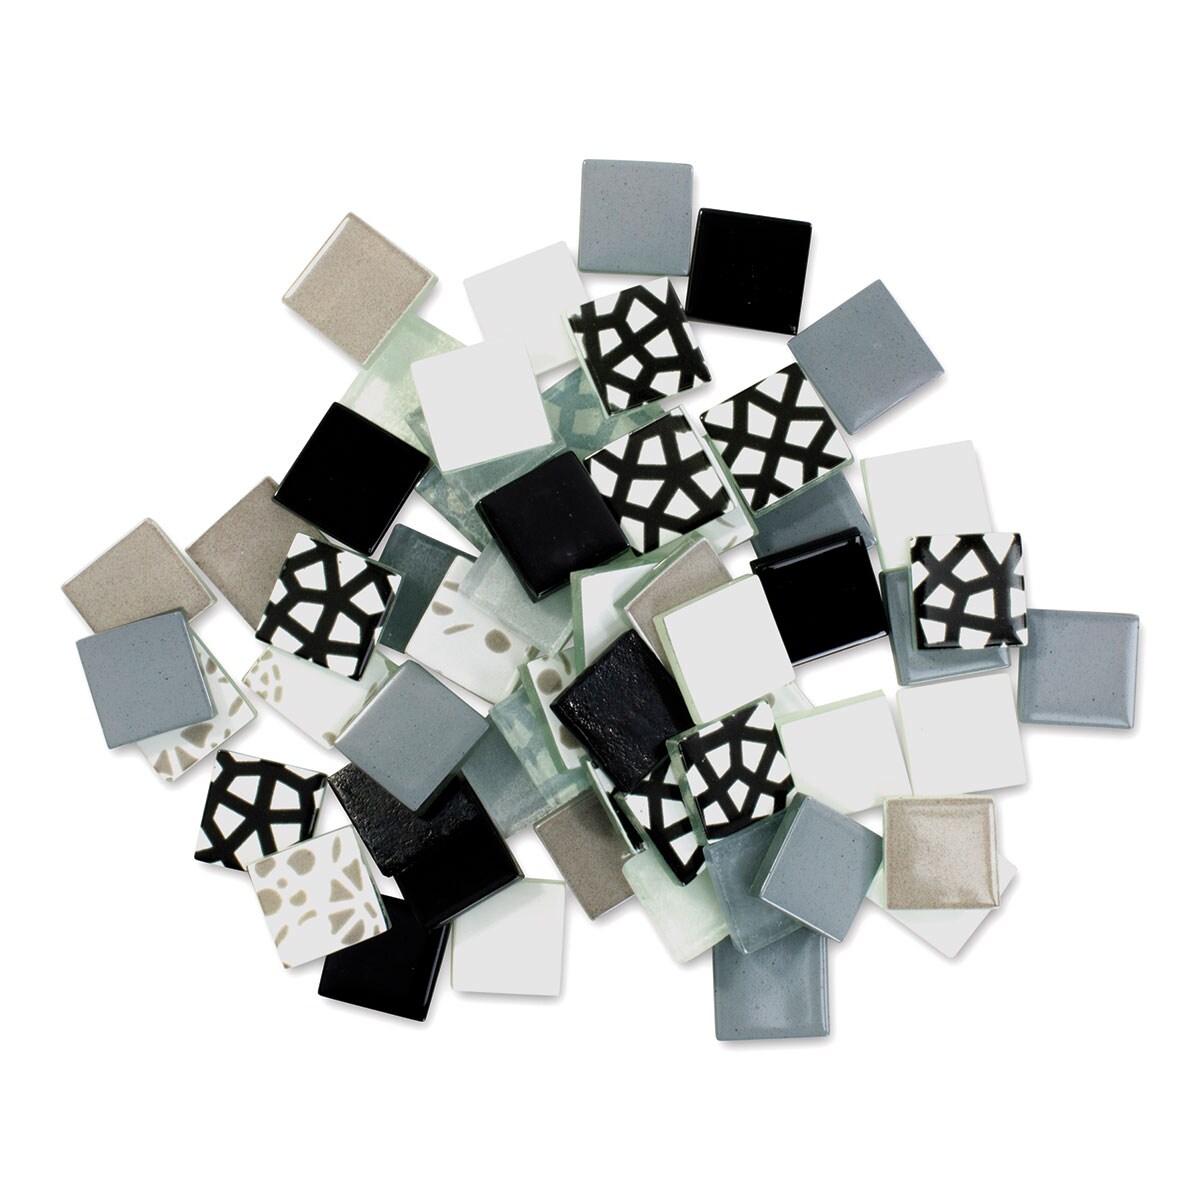 Mosaic Mercantile Patchwork Tiles - Black/Grey, 1 lb